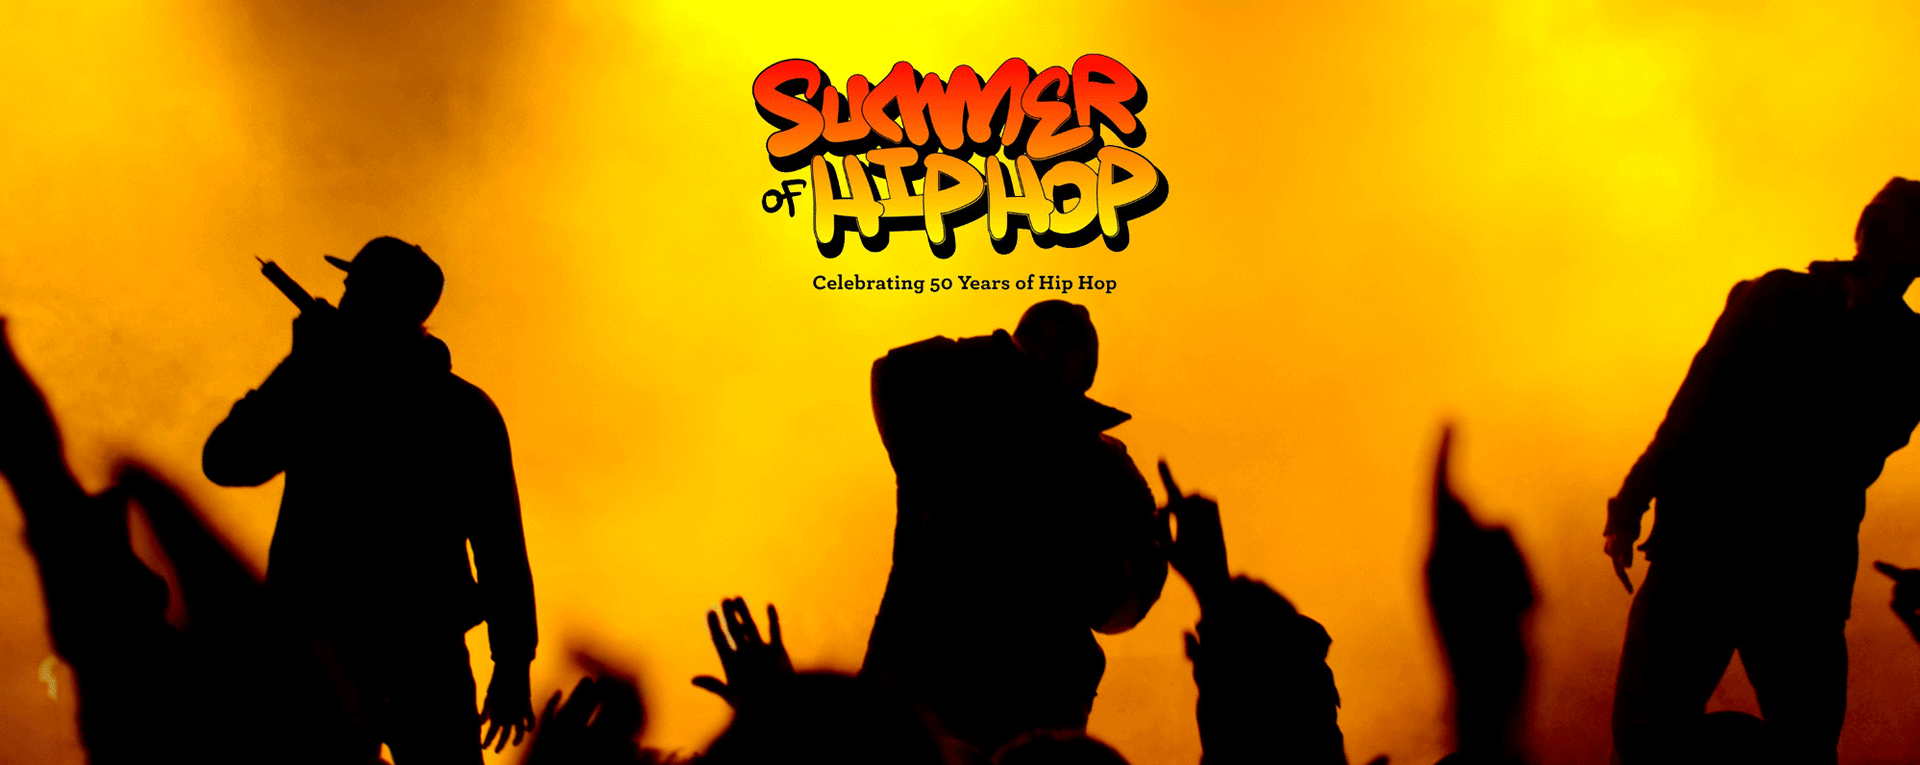 Summer of Hip Hop - Celebrating 50 years of Hip Hop